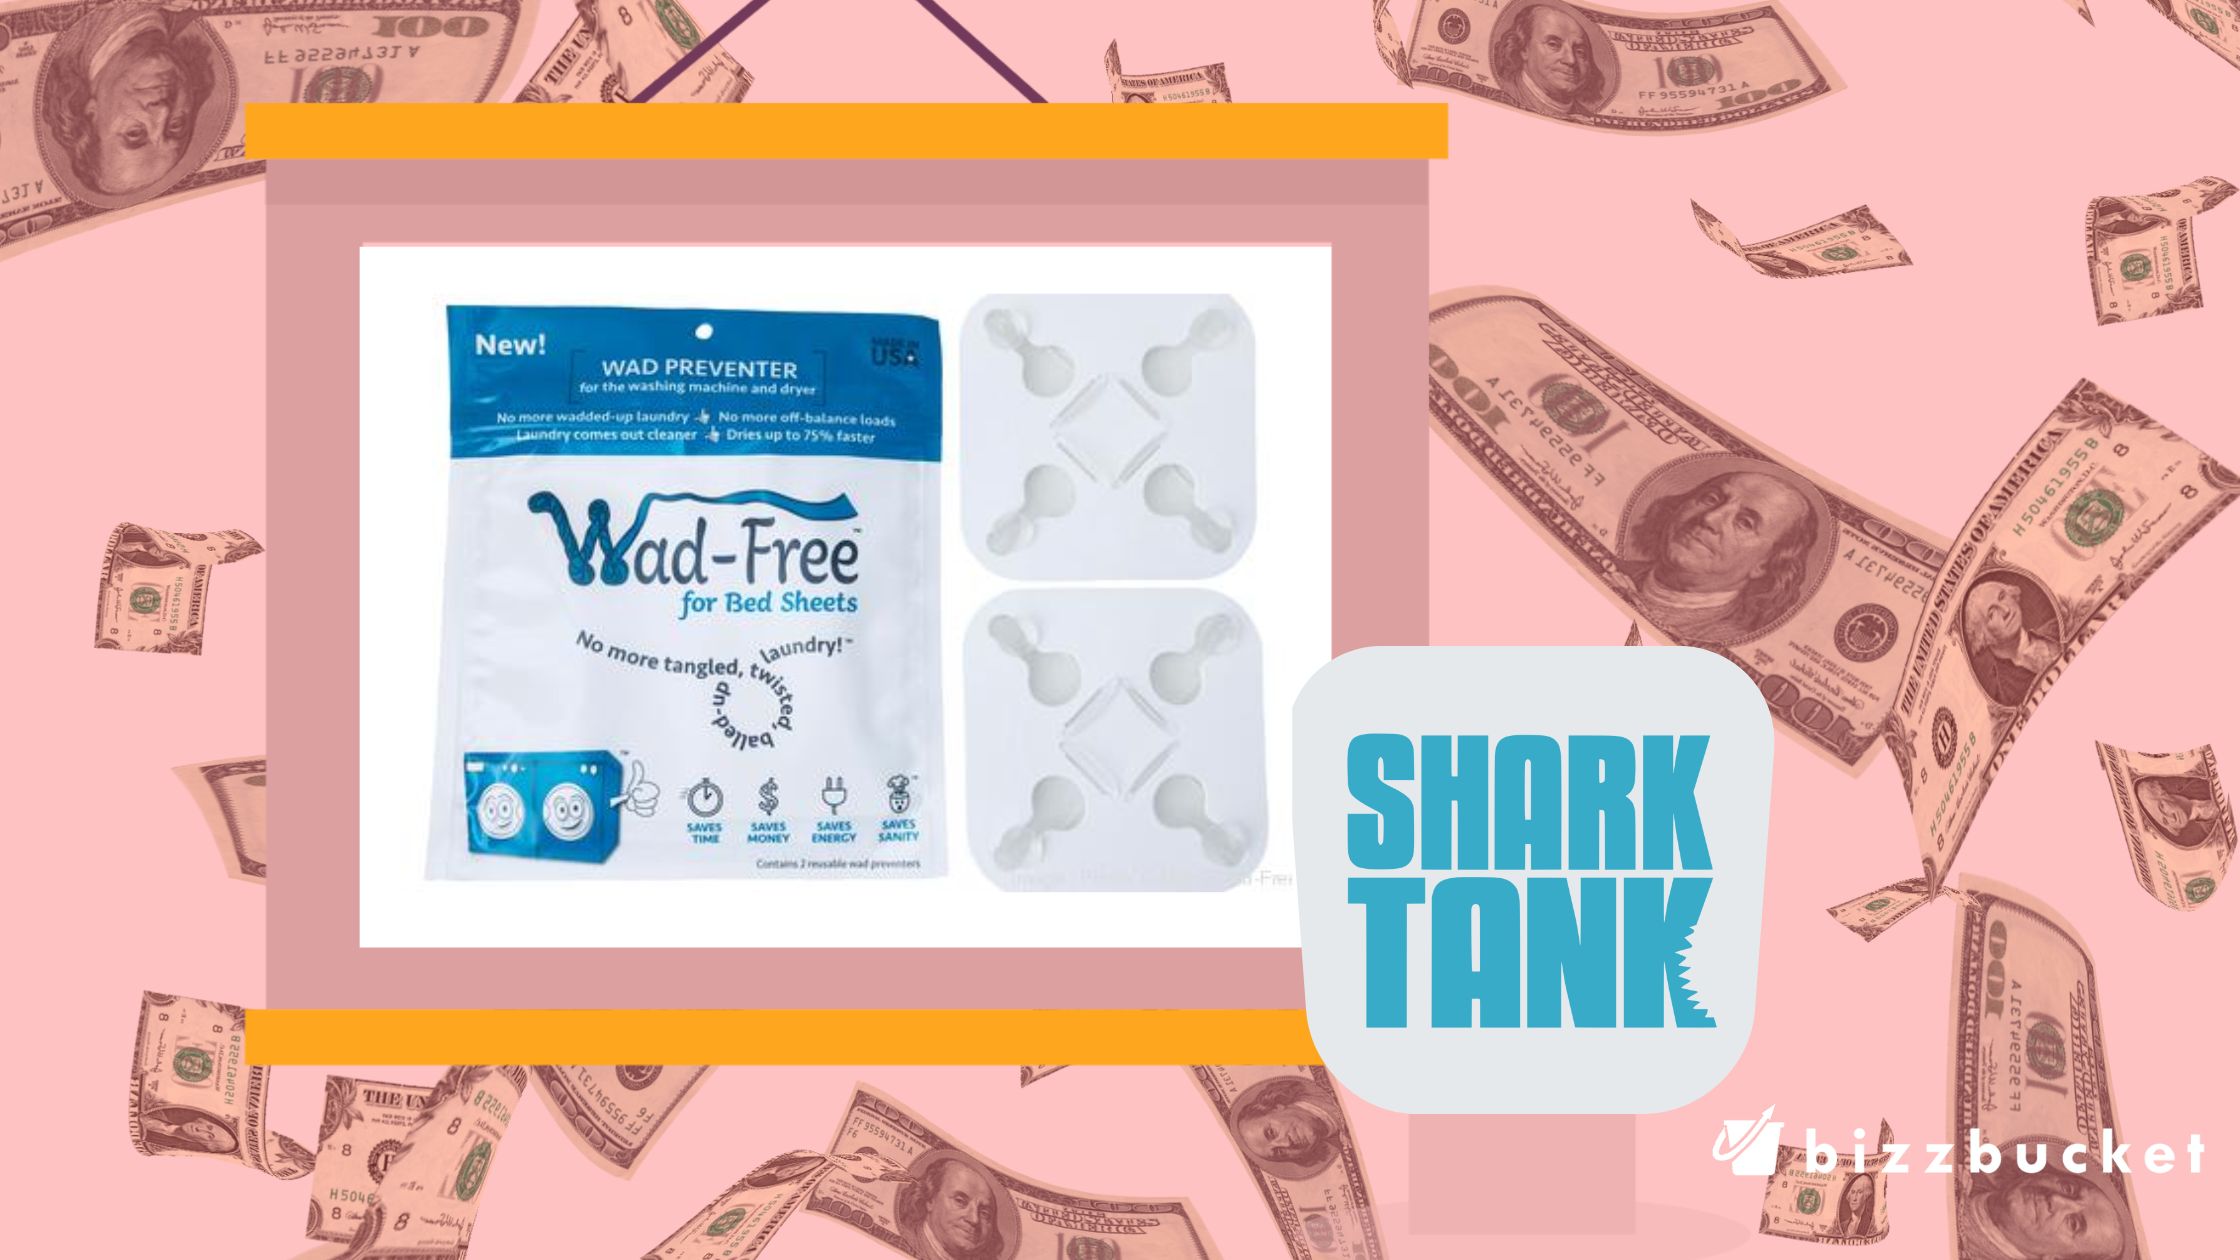 Wad-Free shark tank update